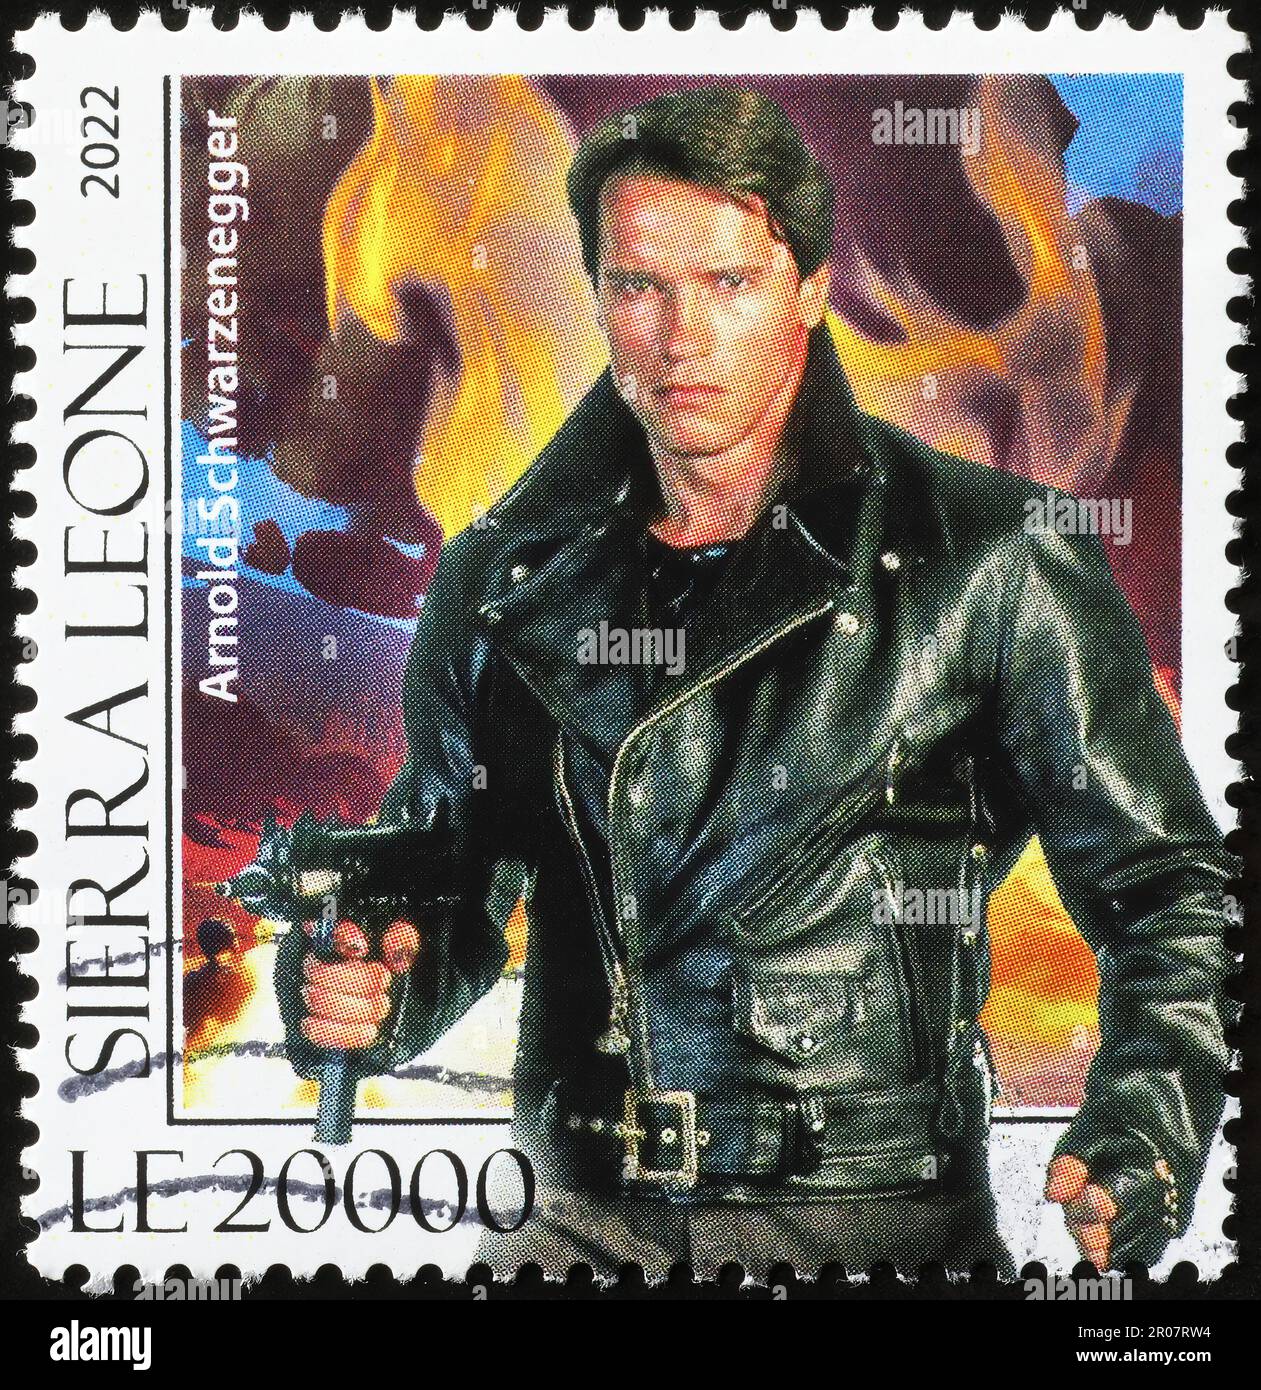 Arnold Schwarzenegger portrait on postage stamp Stock Photo